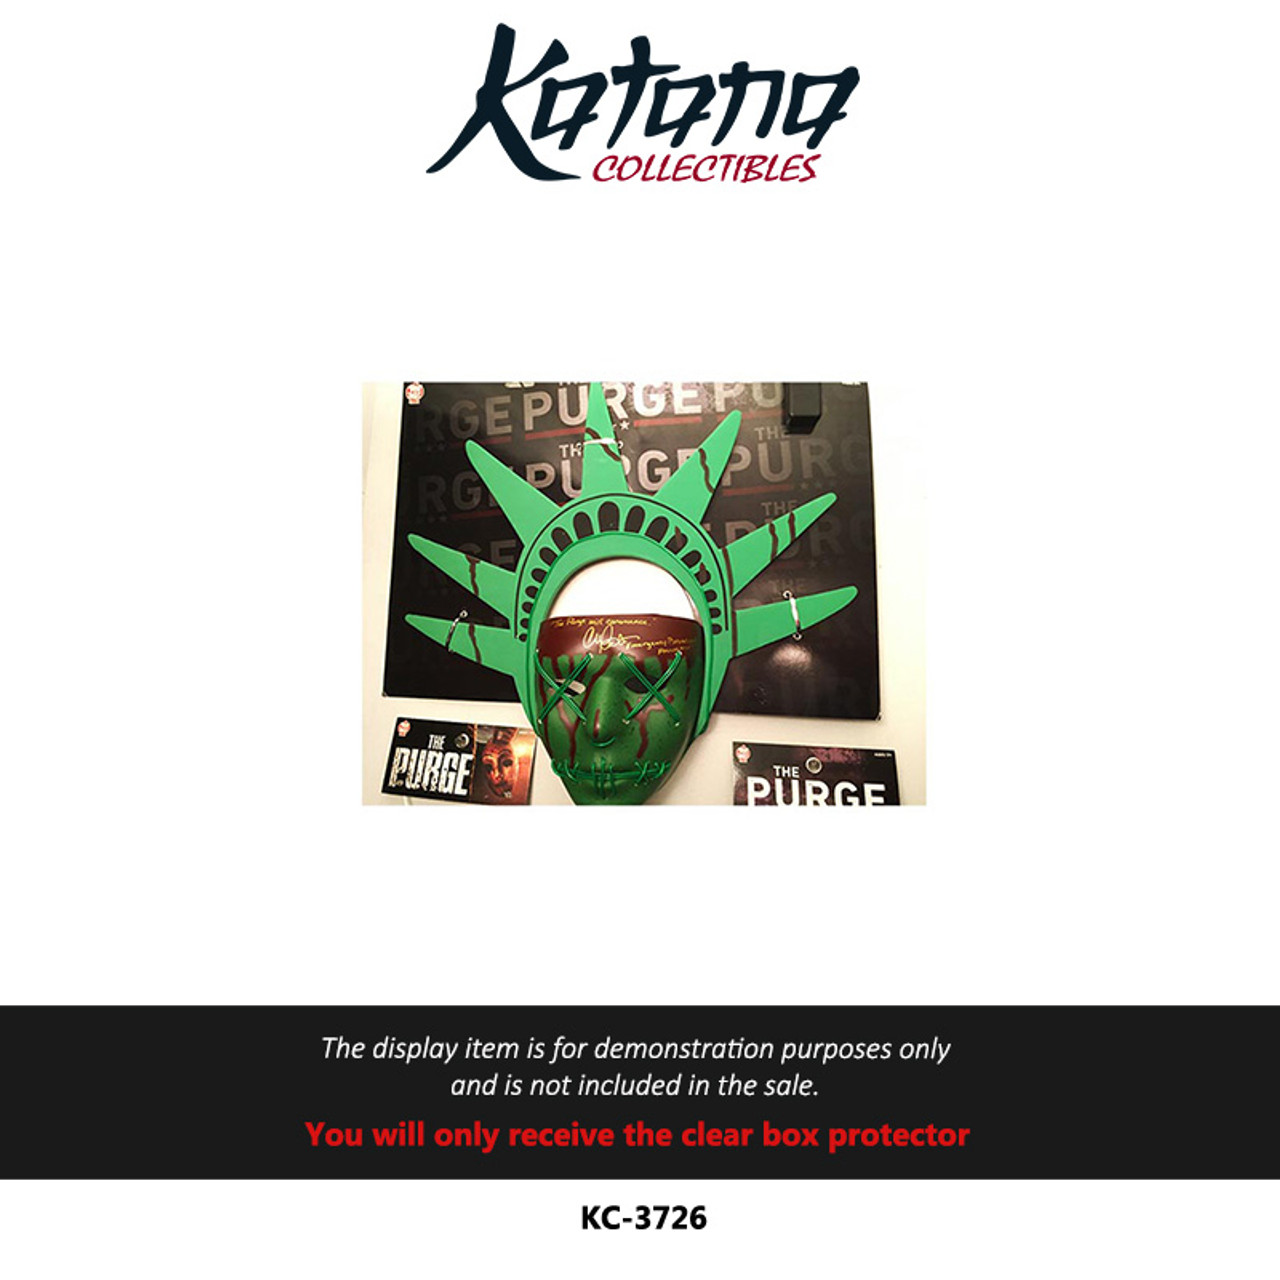 Katana Collectibles Protector For Purge liberty mask